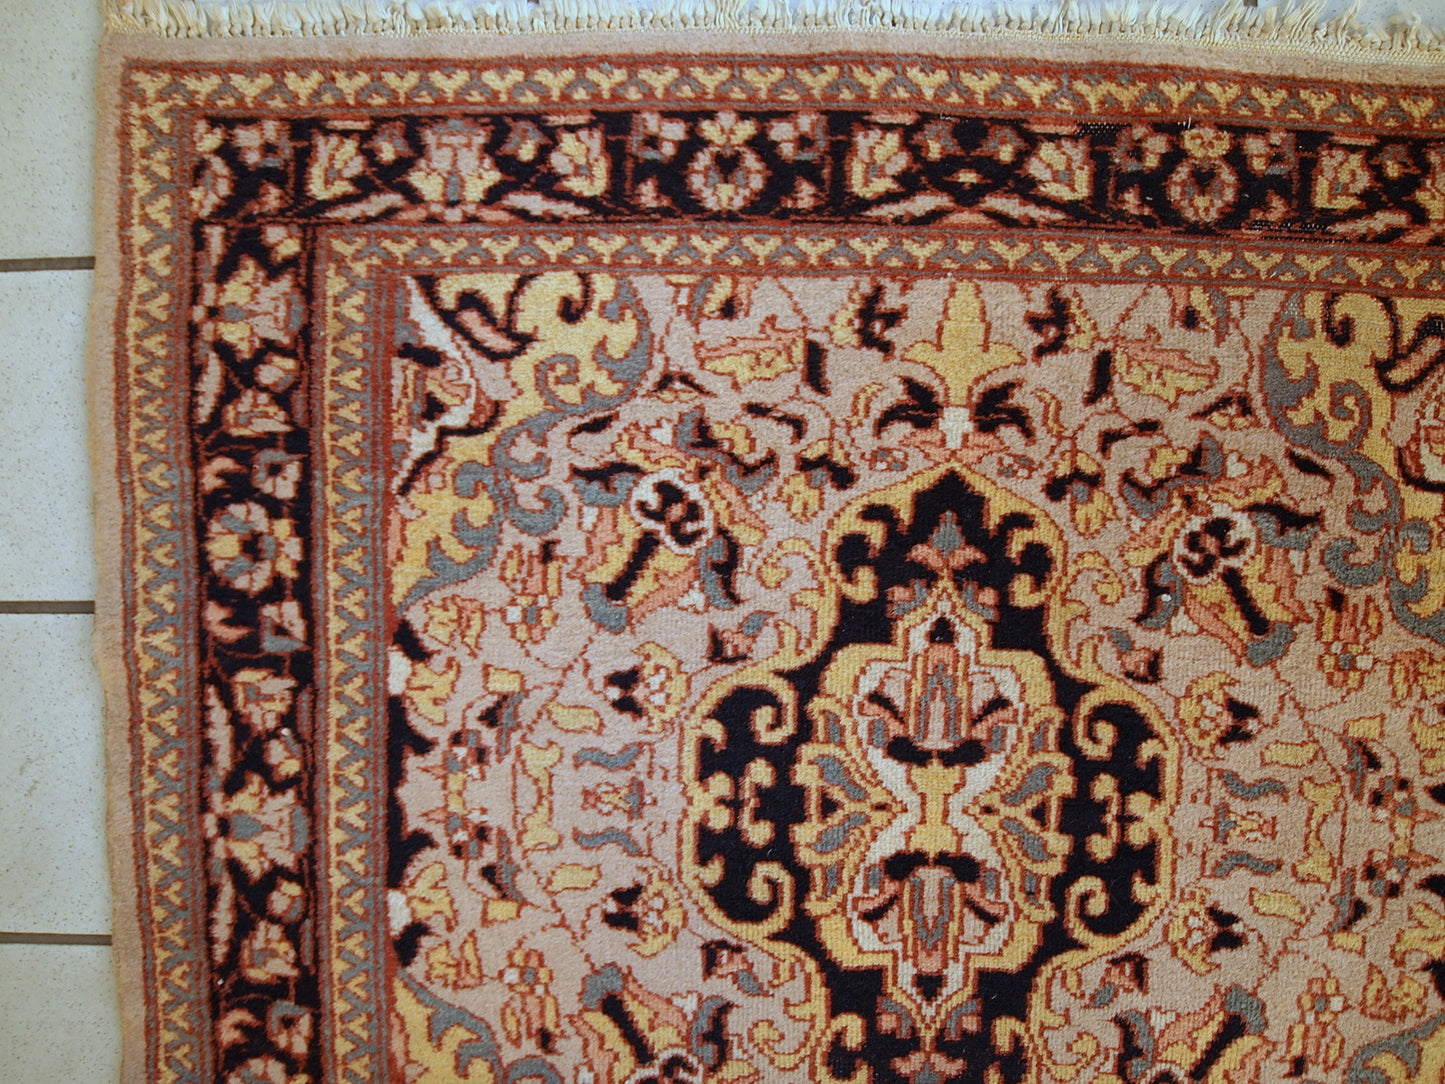 Handmade vintage Pakistani Lahore rug 3,1' x 5' (95cm x 154cm) 1970s - 1C350